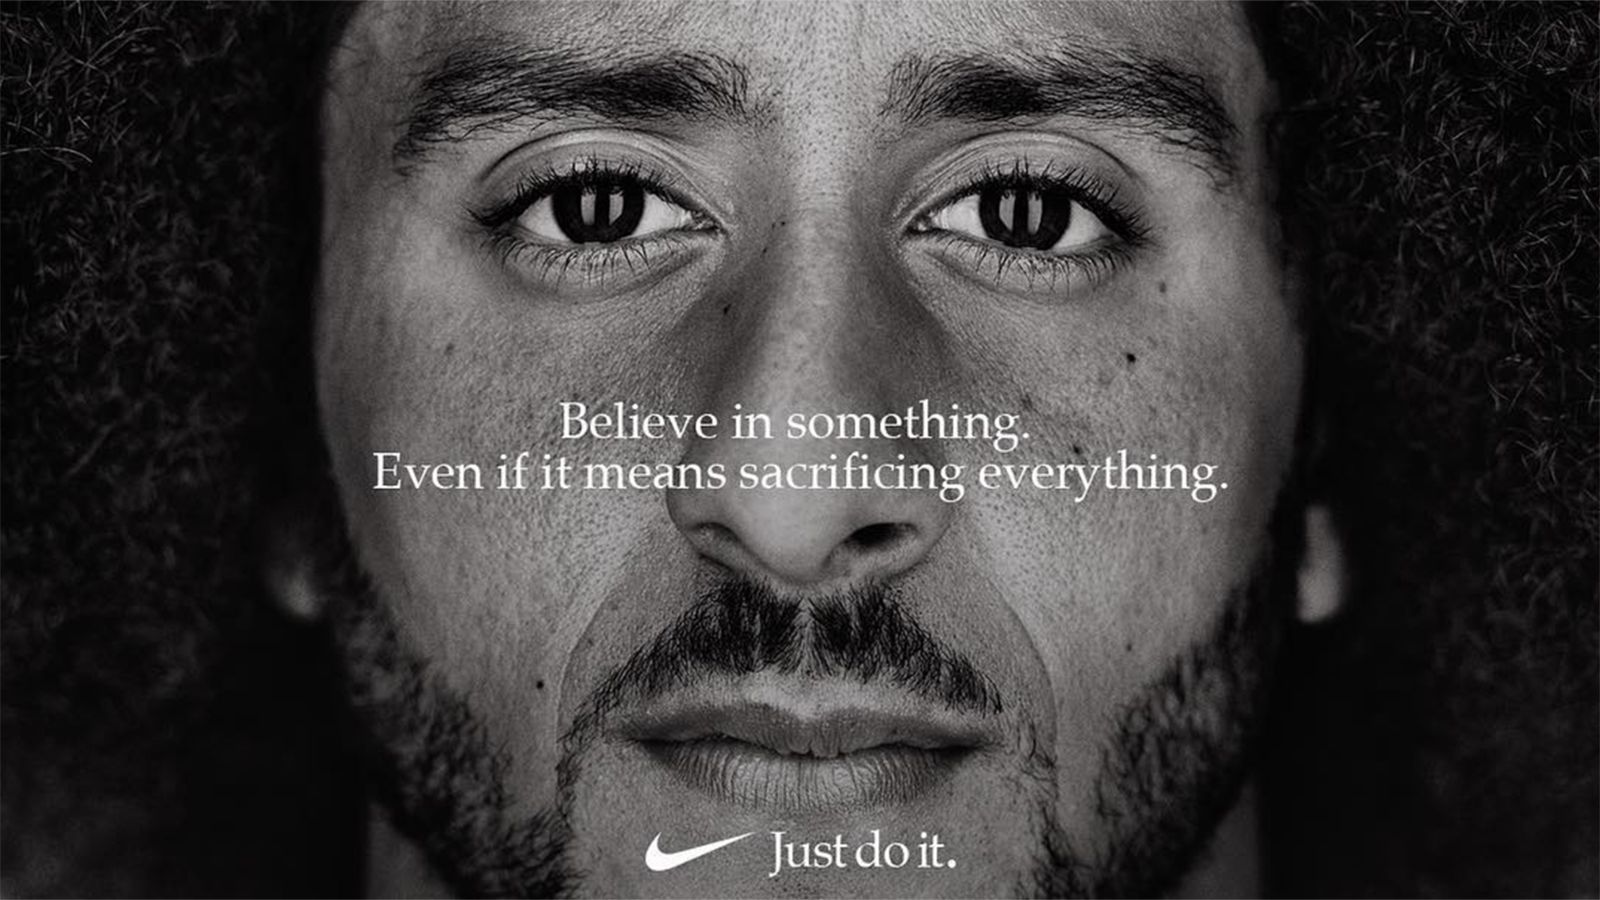 How Nike's "Just do it" became a slogan activism | CNN Politics